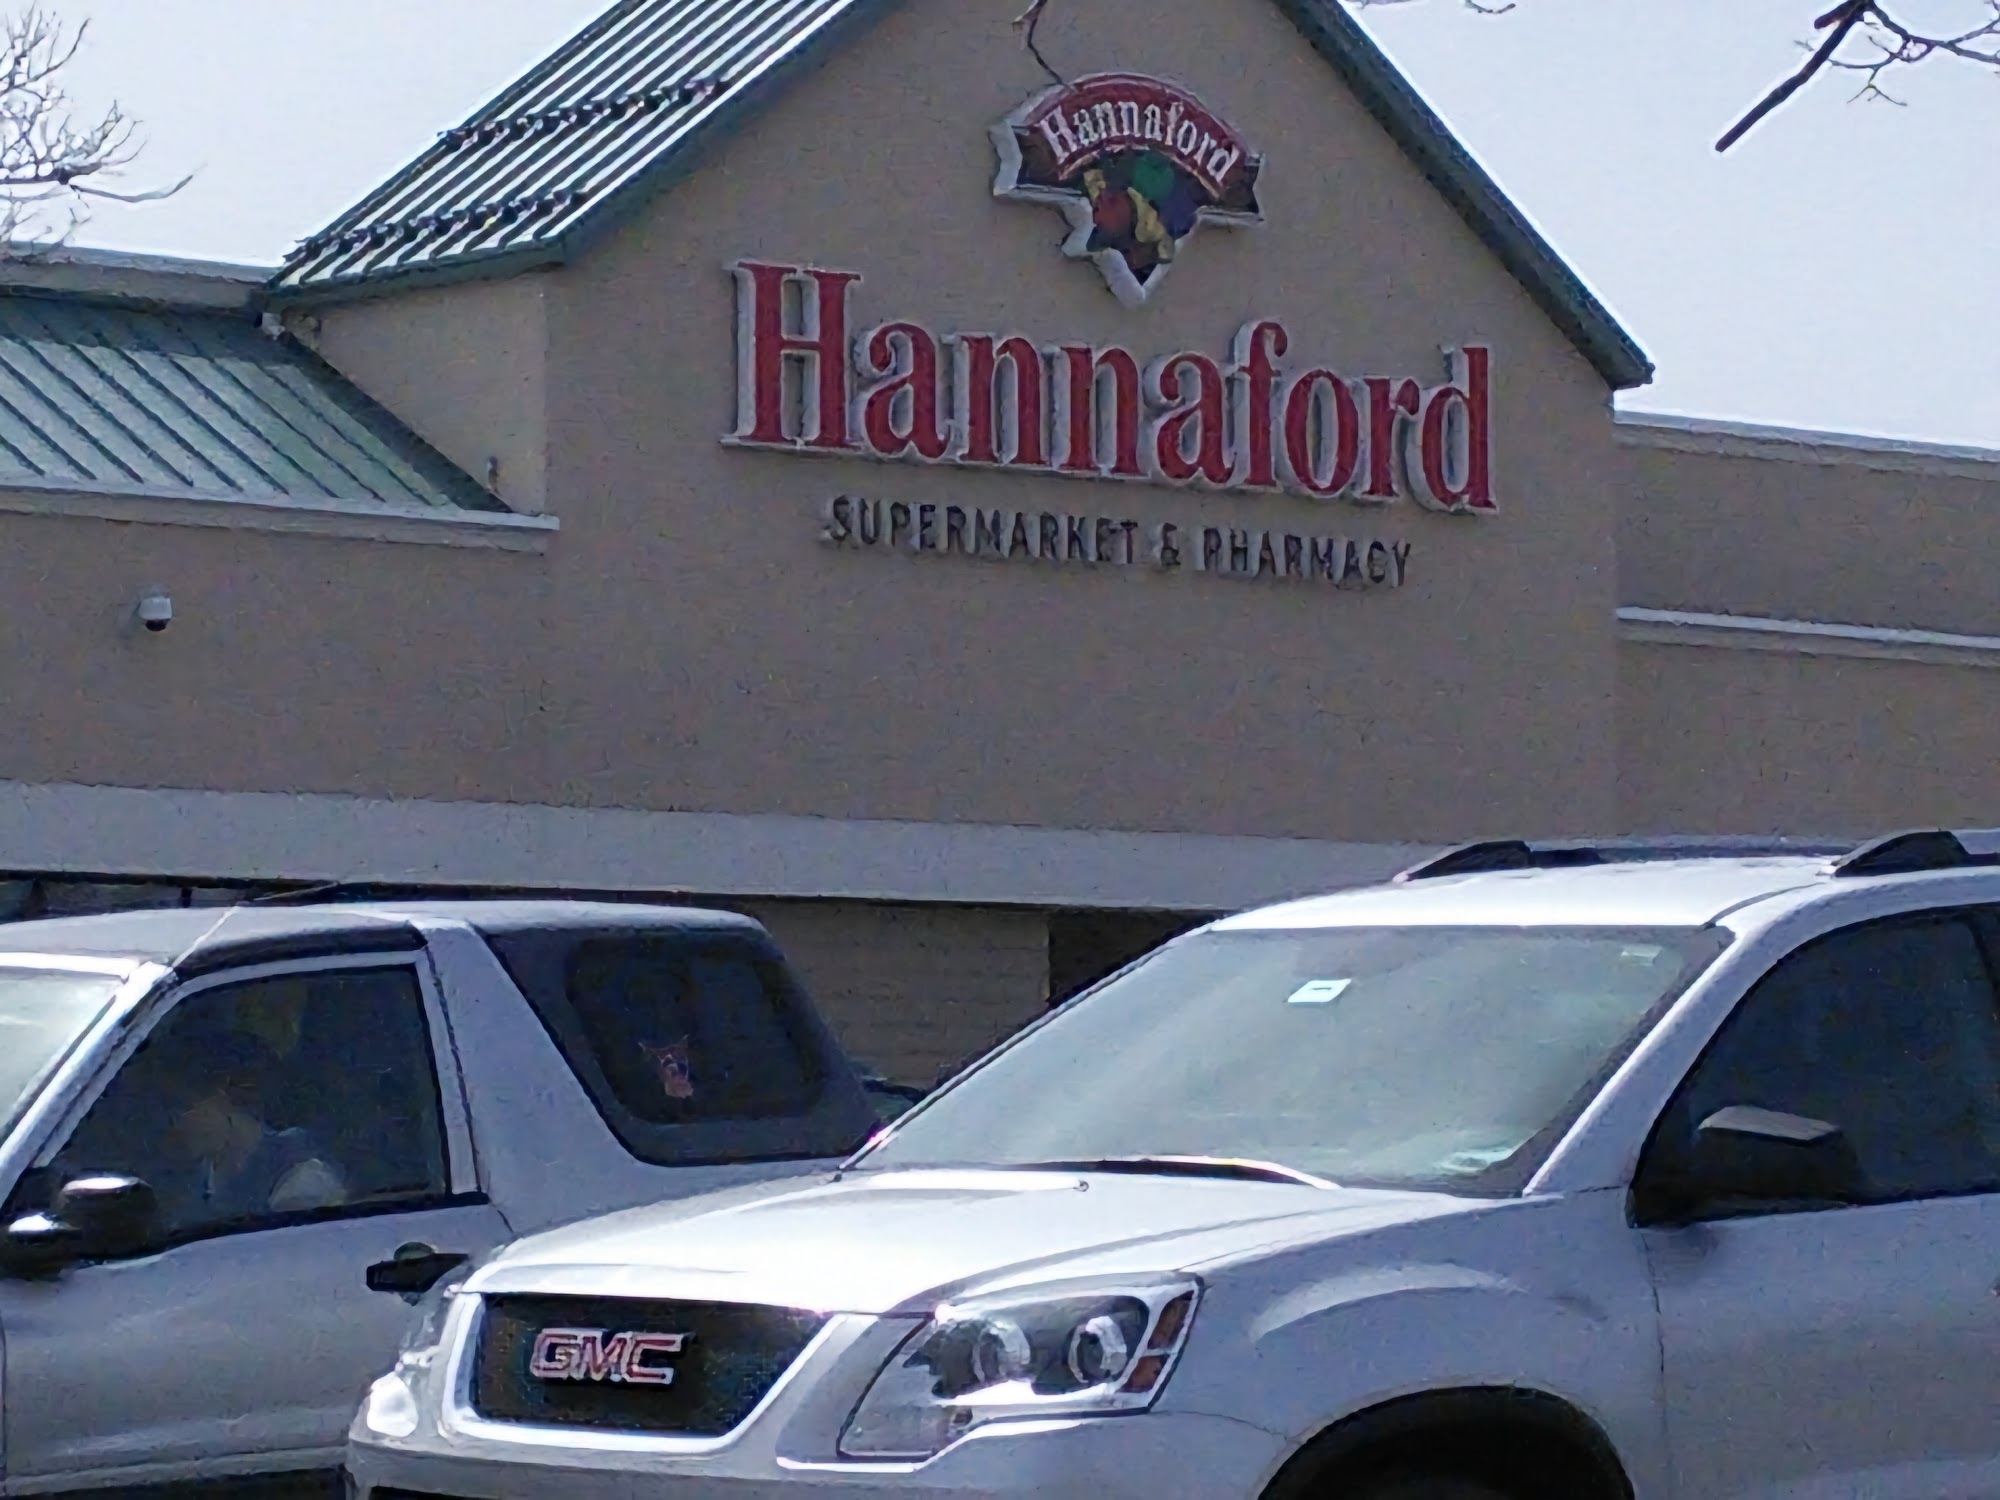 Hannaford Pharmacy